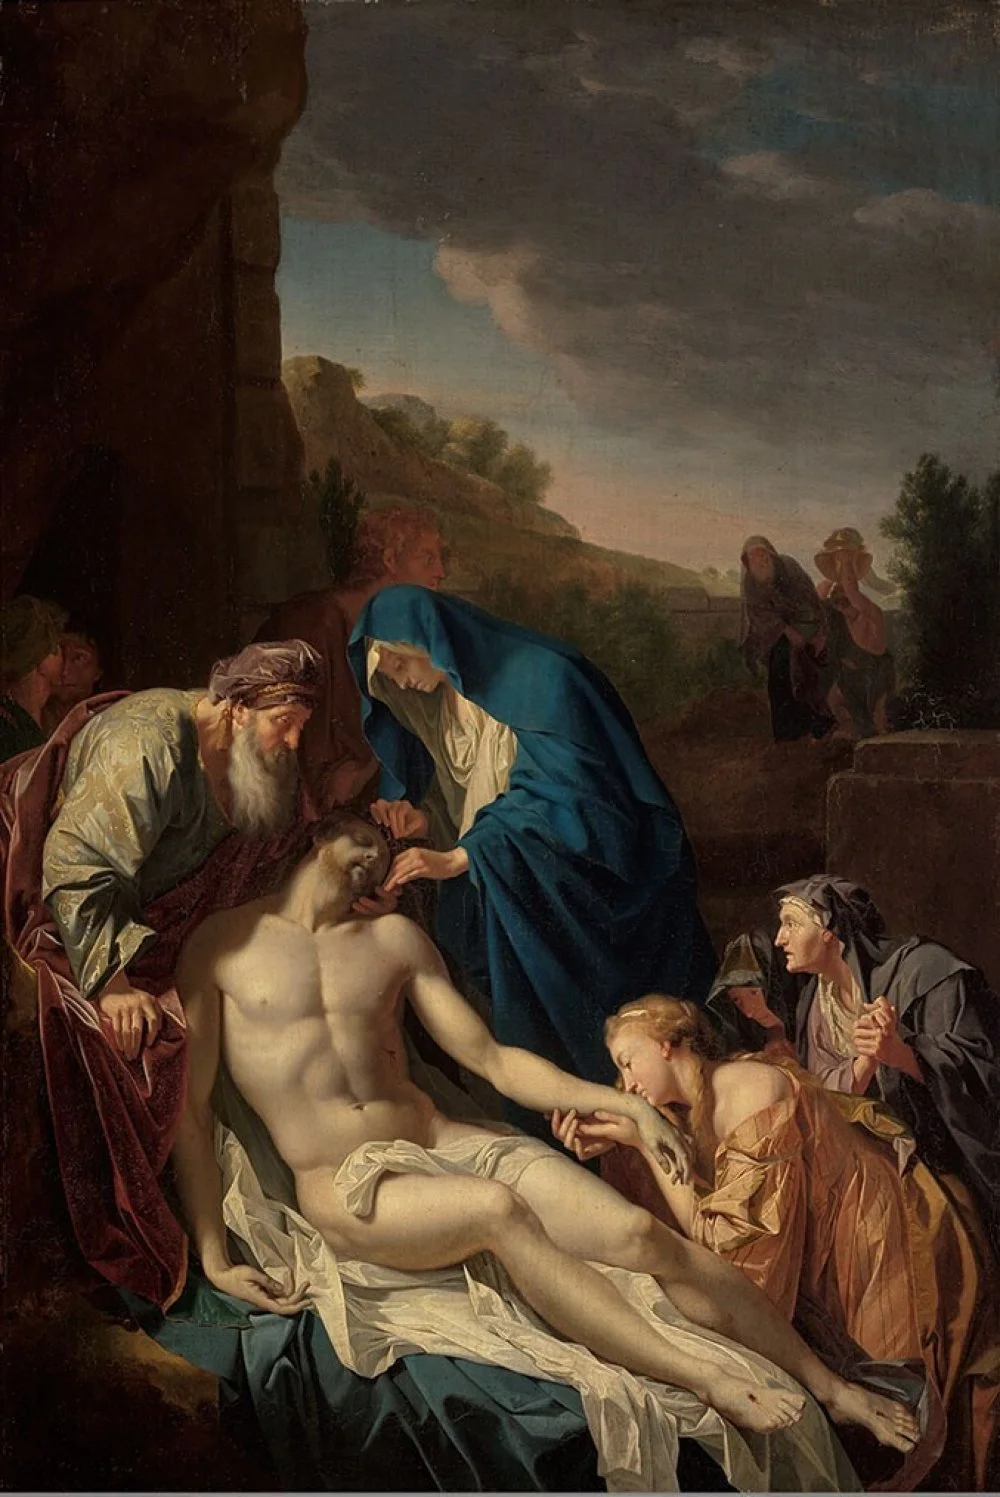  Питер ван дер Верфф. Погребение Христа/Wikimedia Commons